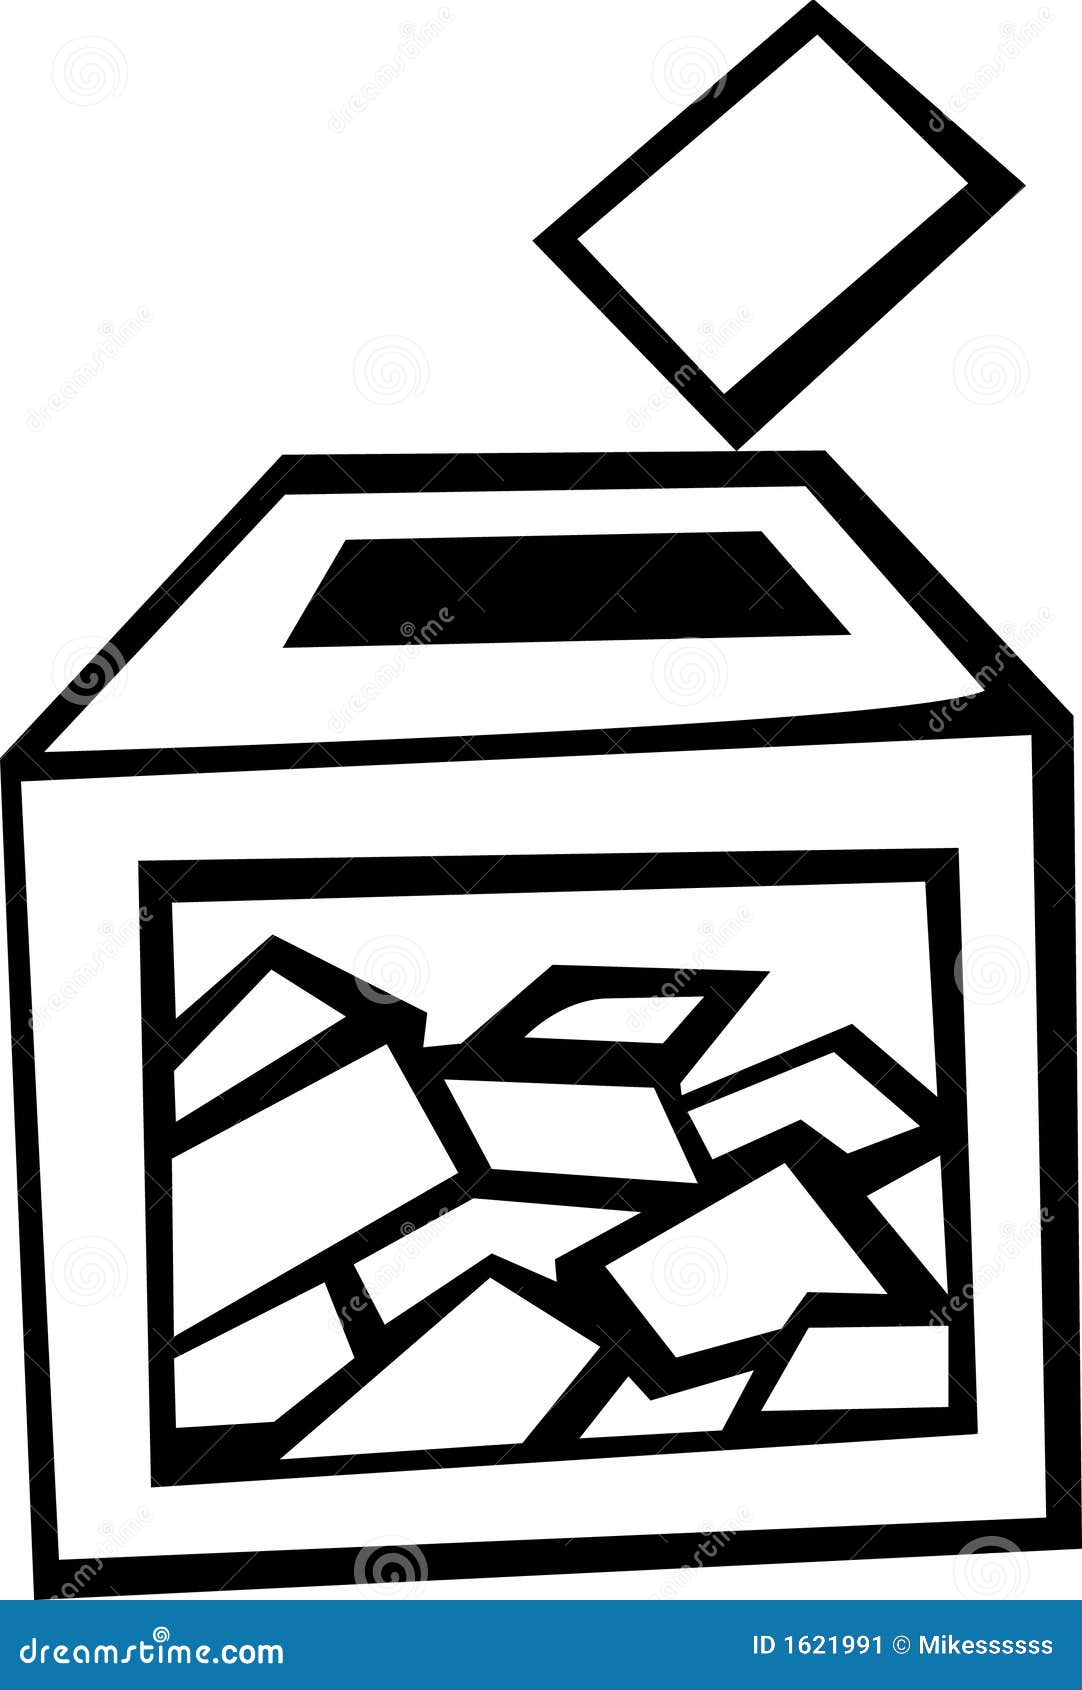 clipart urne de vote - photo #28